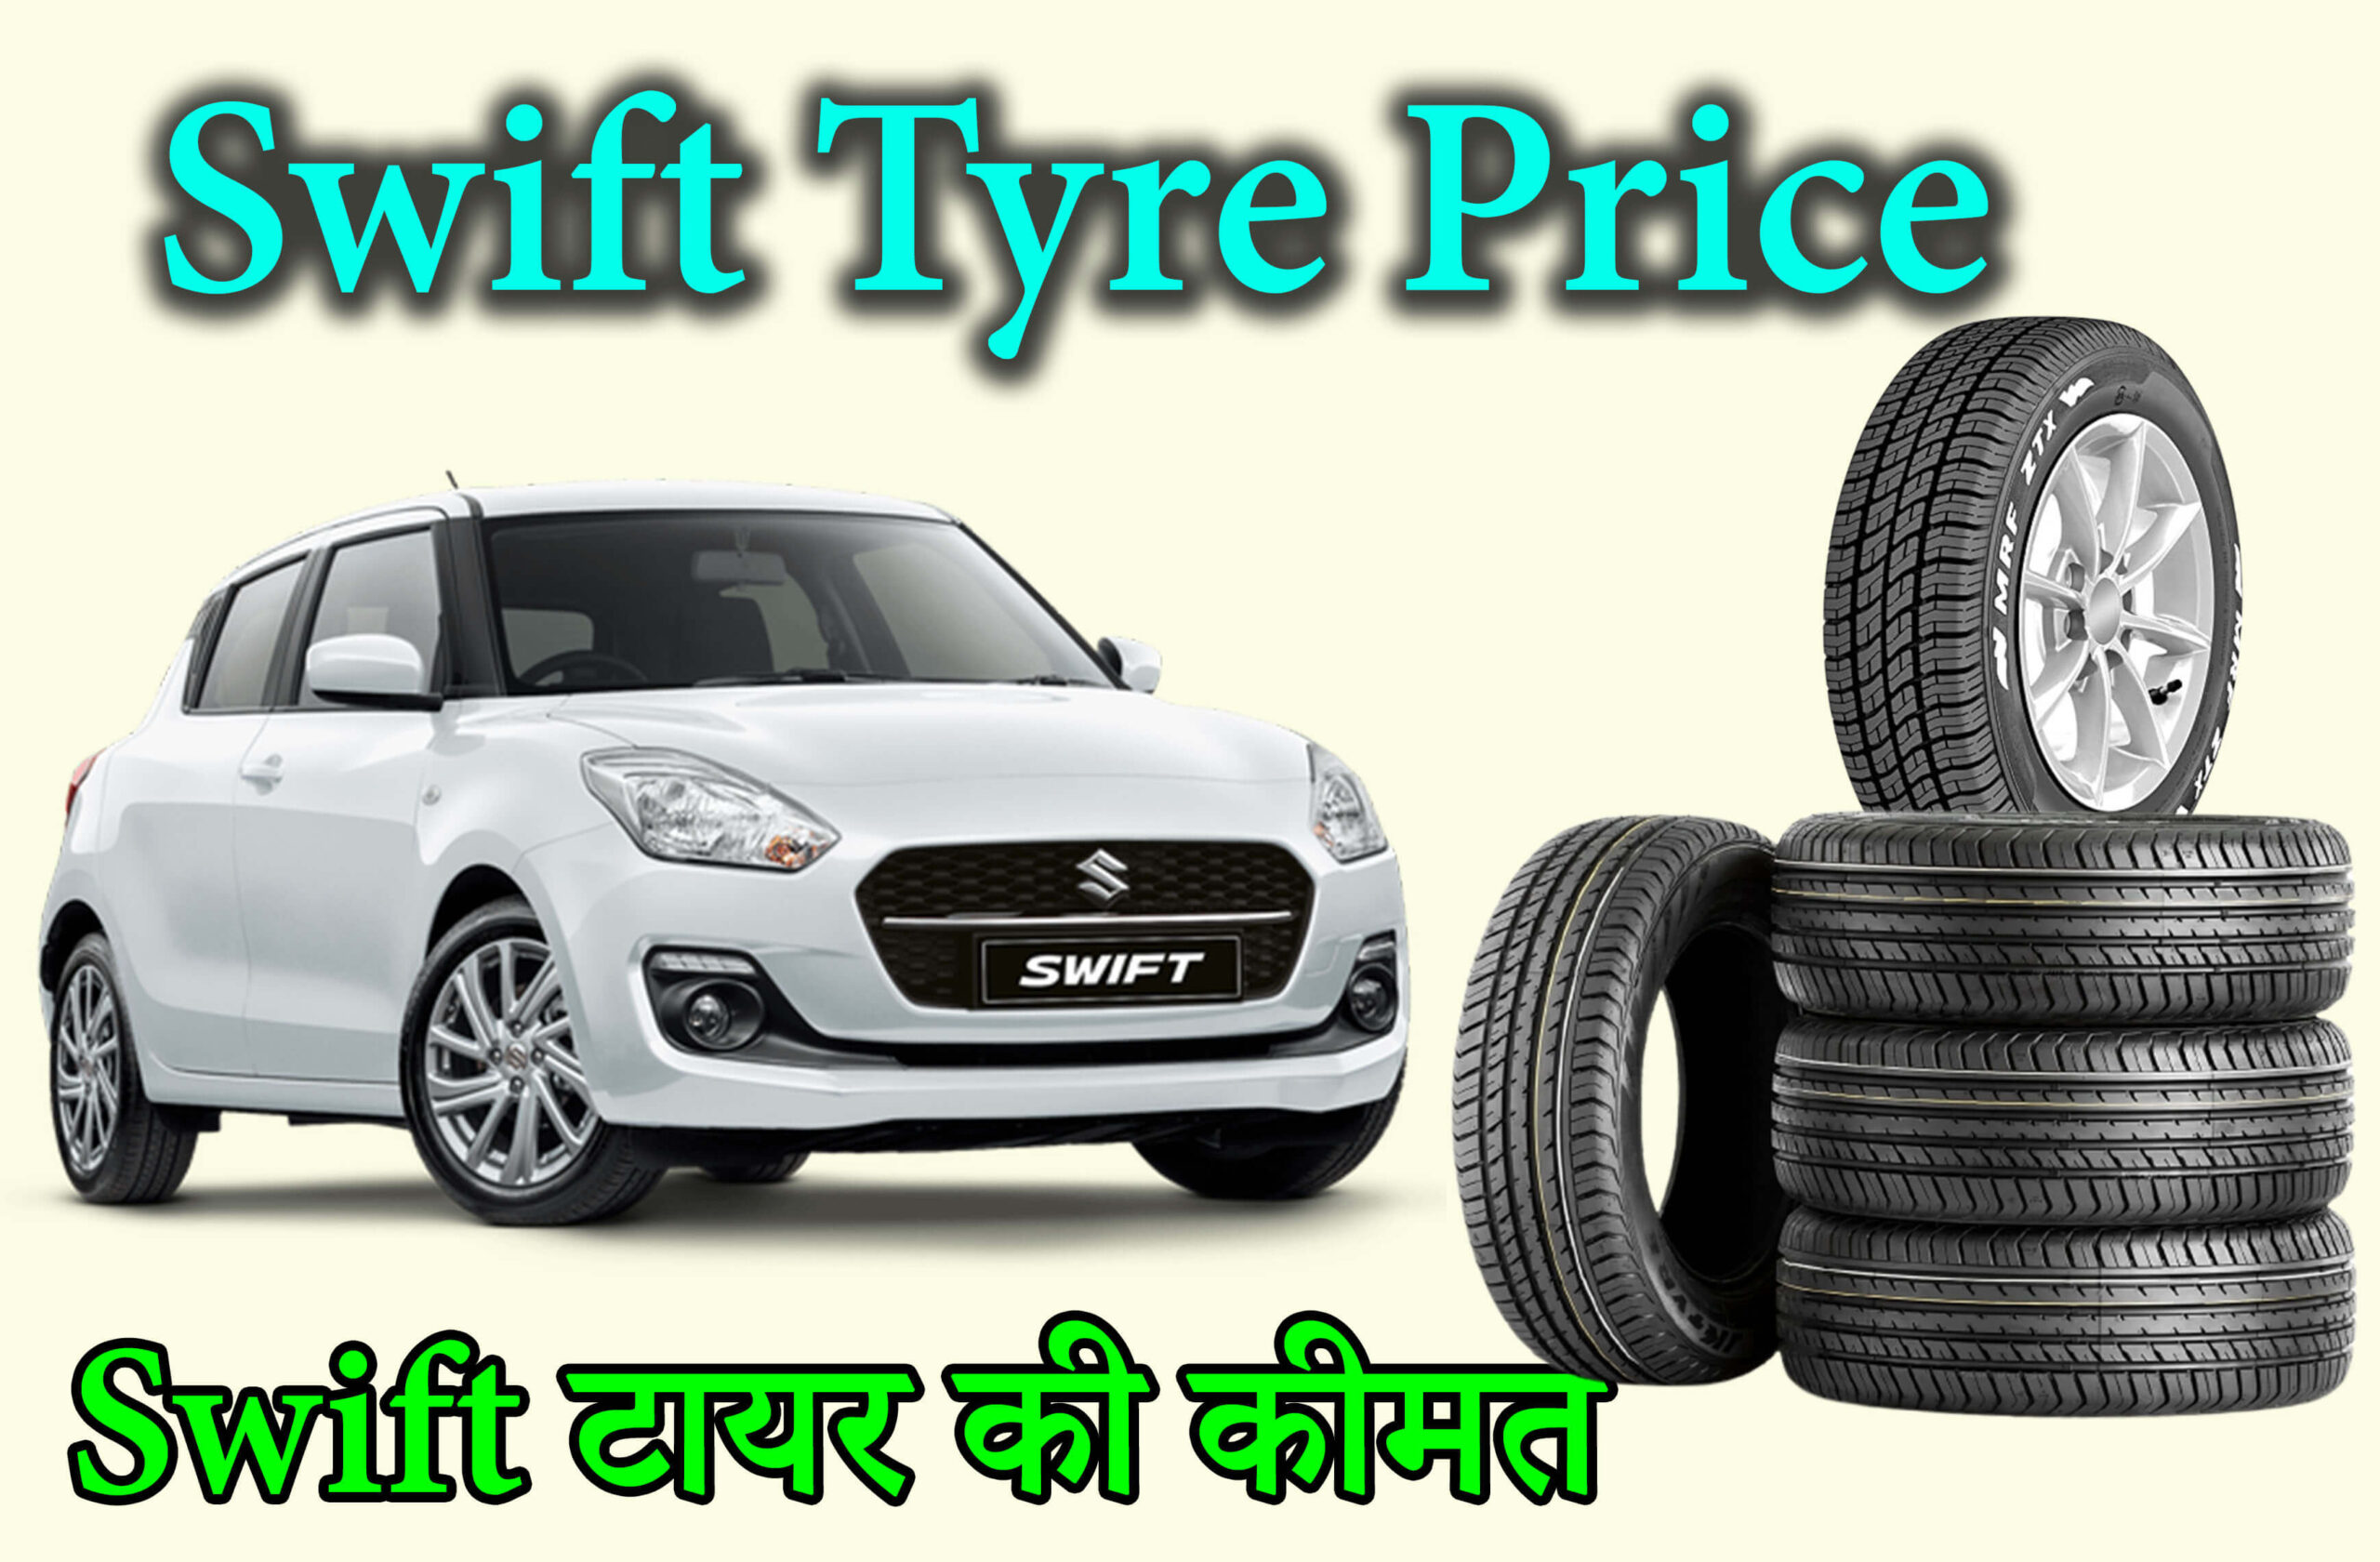 Swift Tyre Price